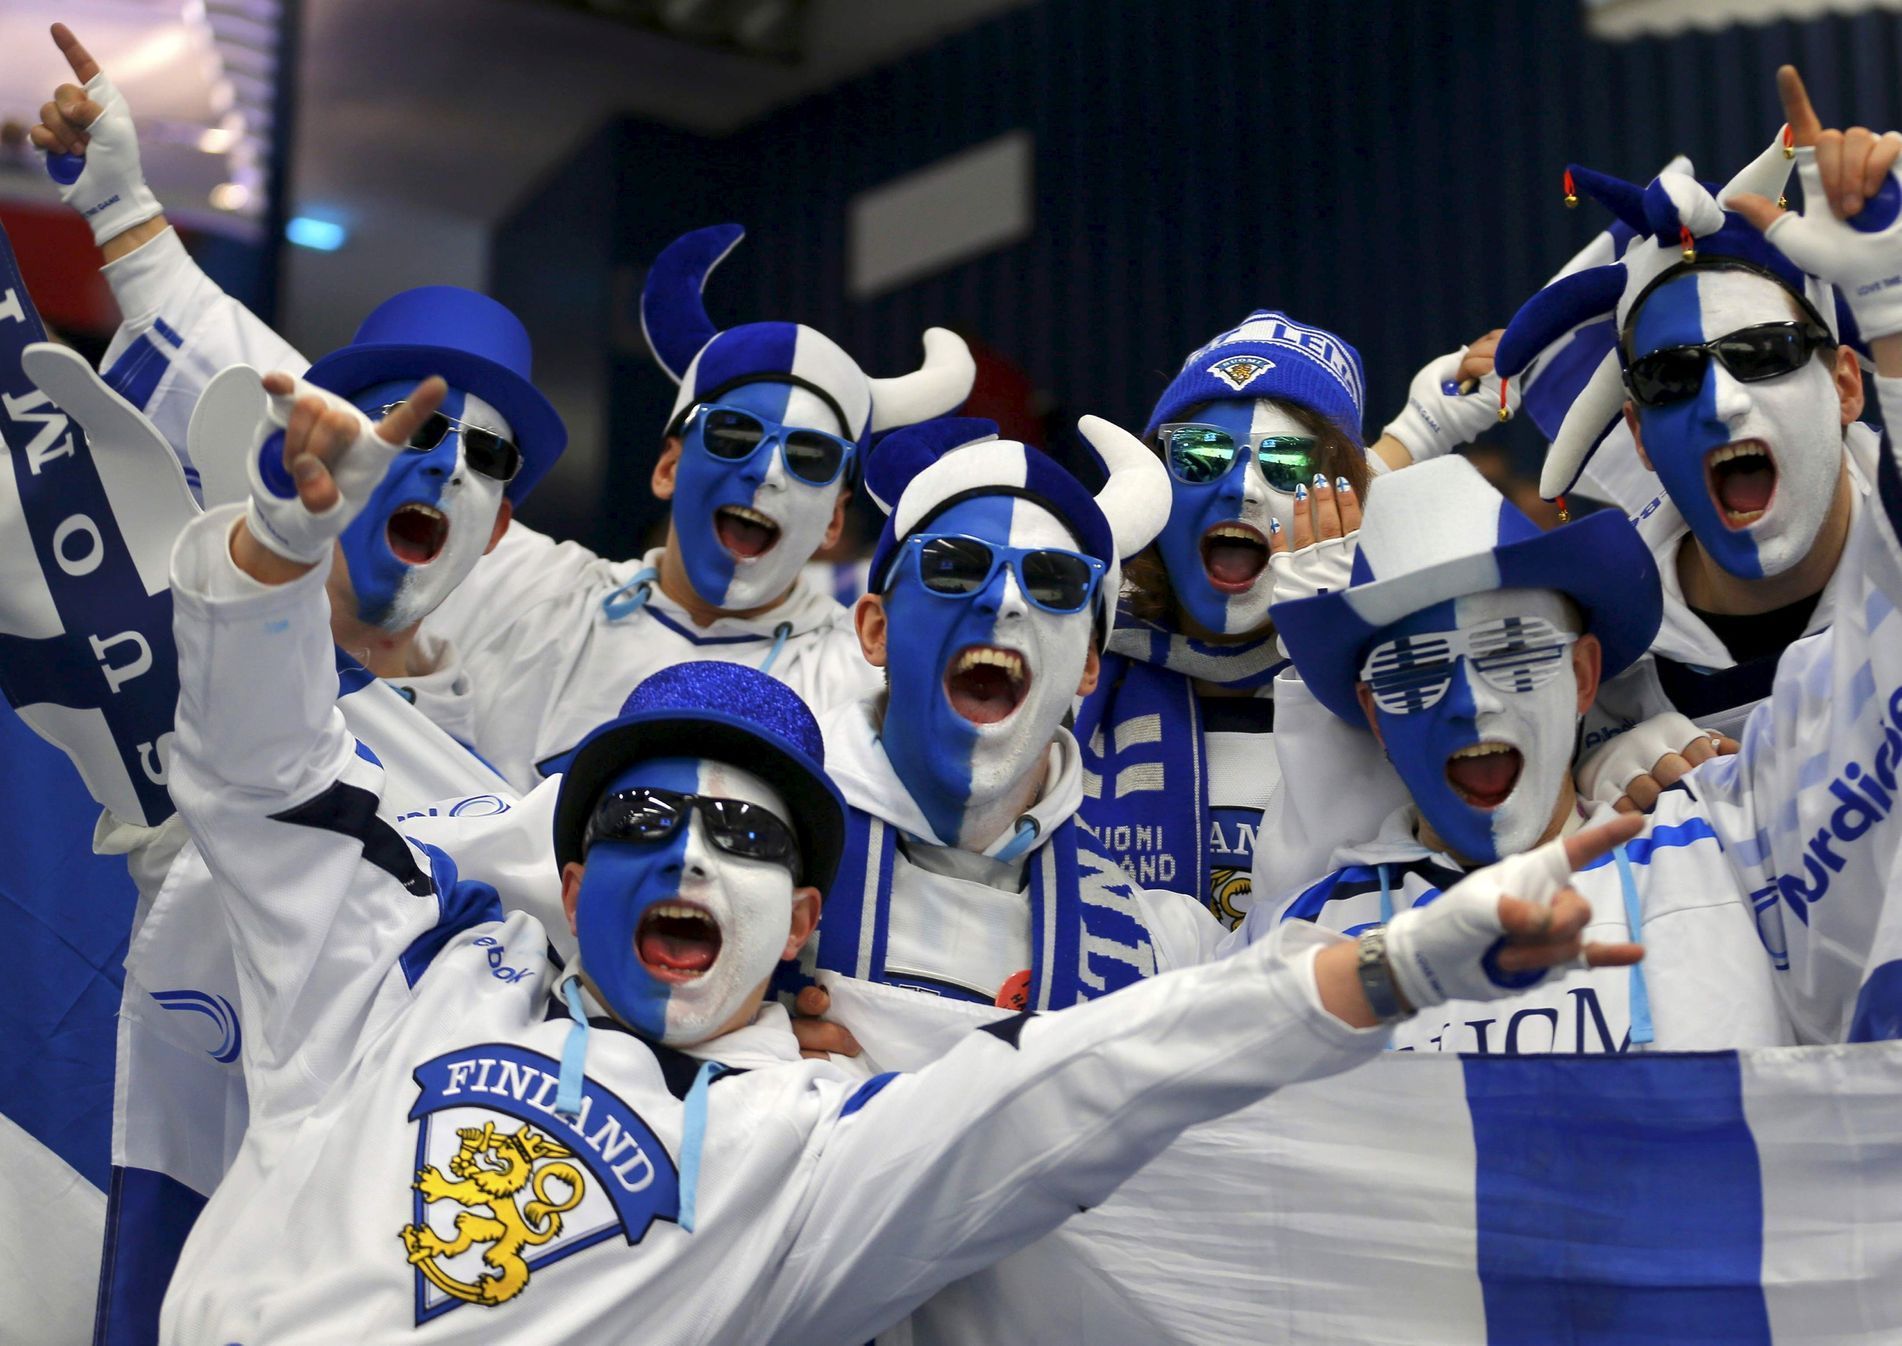 MS v hokeji 2015: fanoušci Finska